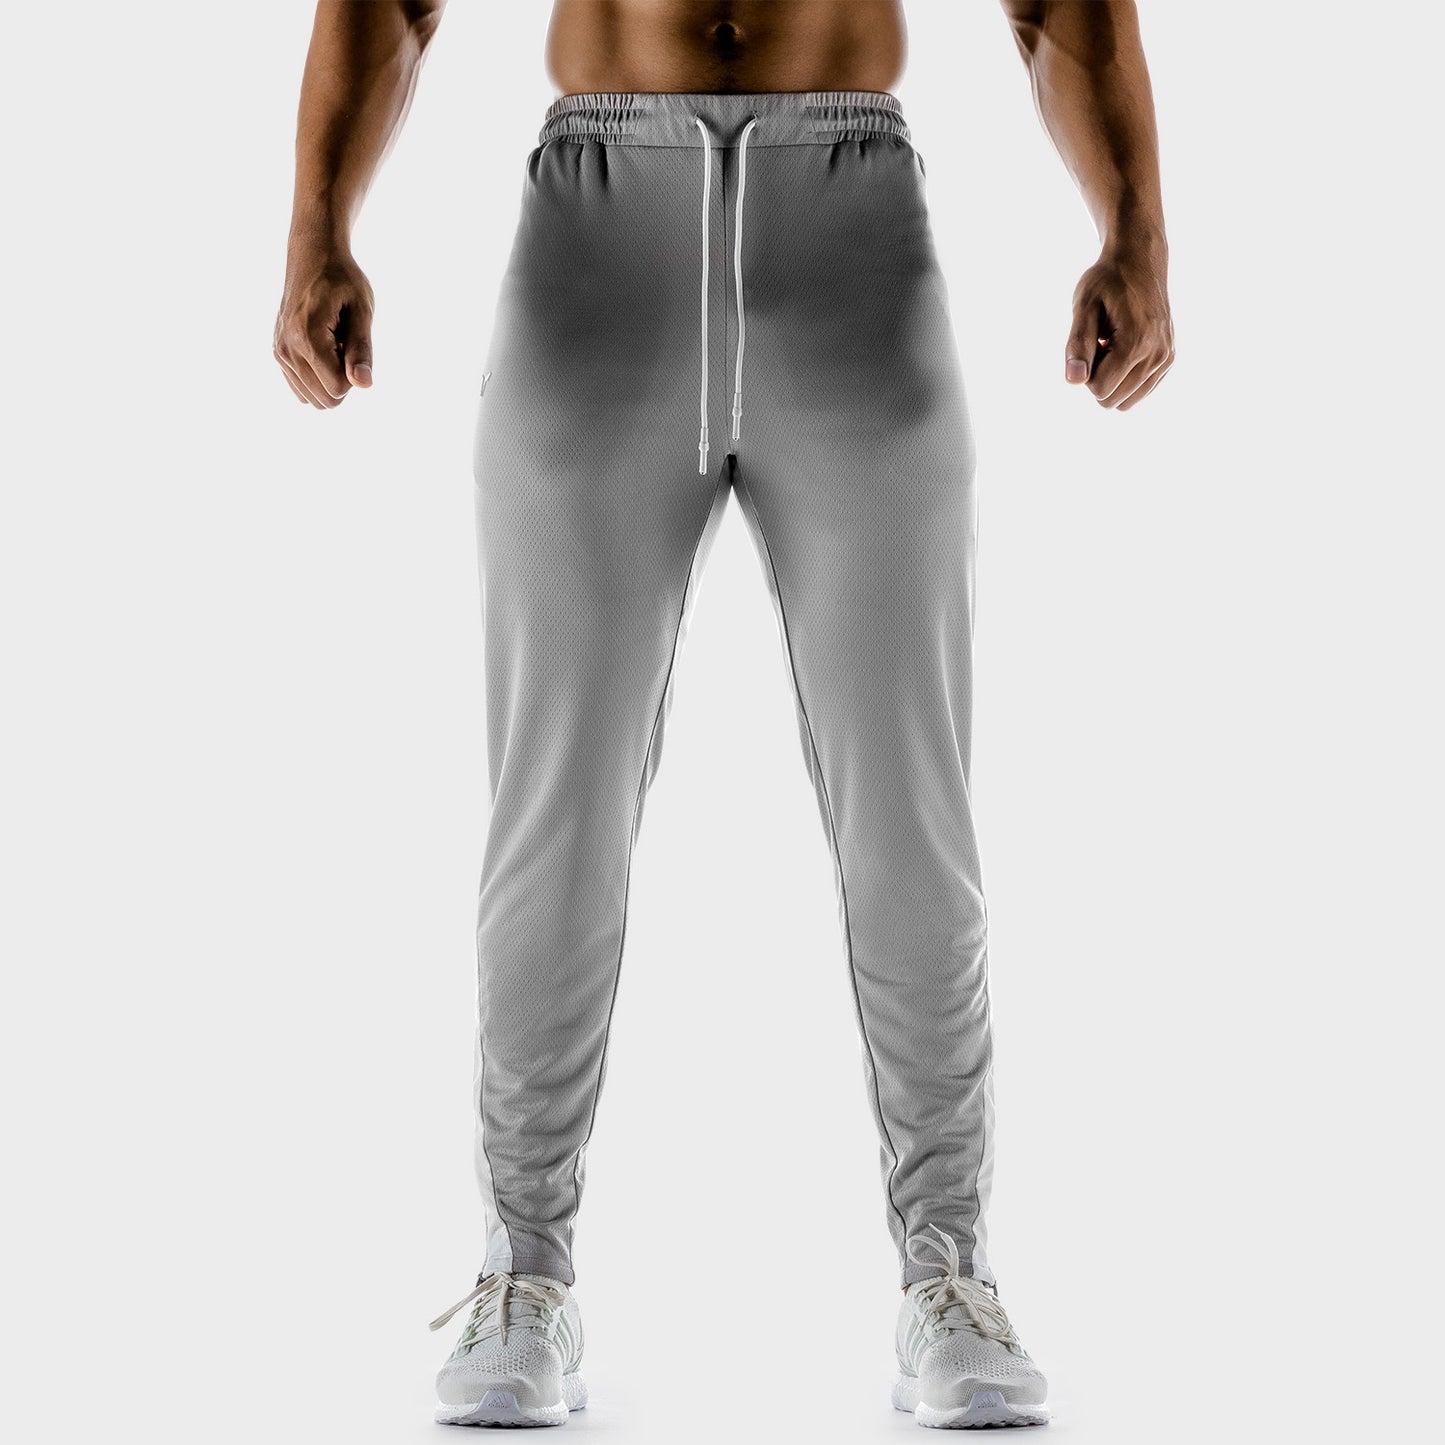 squatwolf-gym-wear-hybrid-2-0-track-pants-grey-workout-pants-for-men